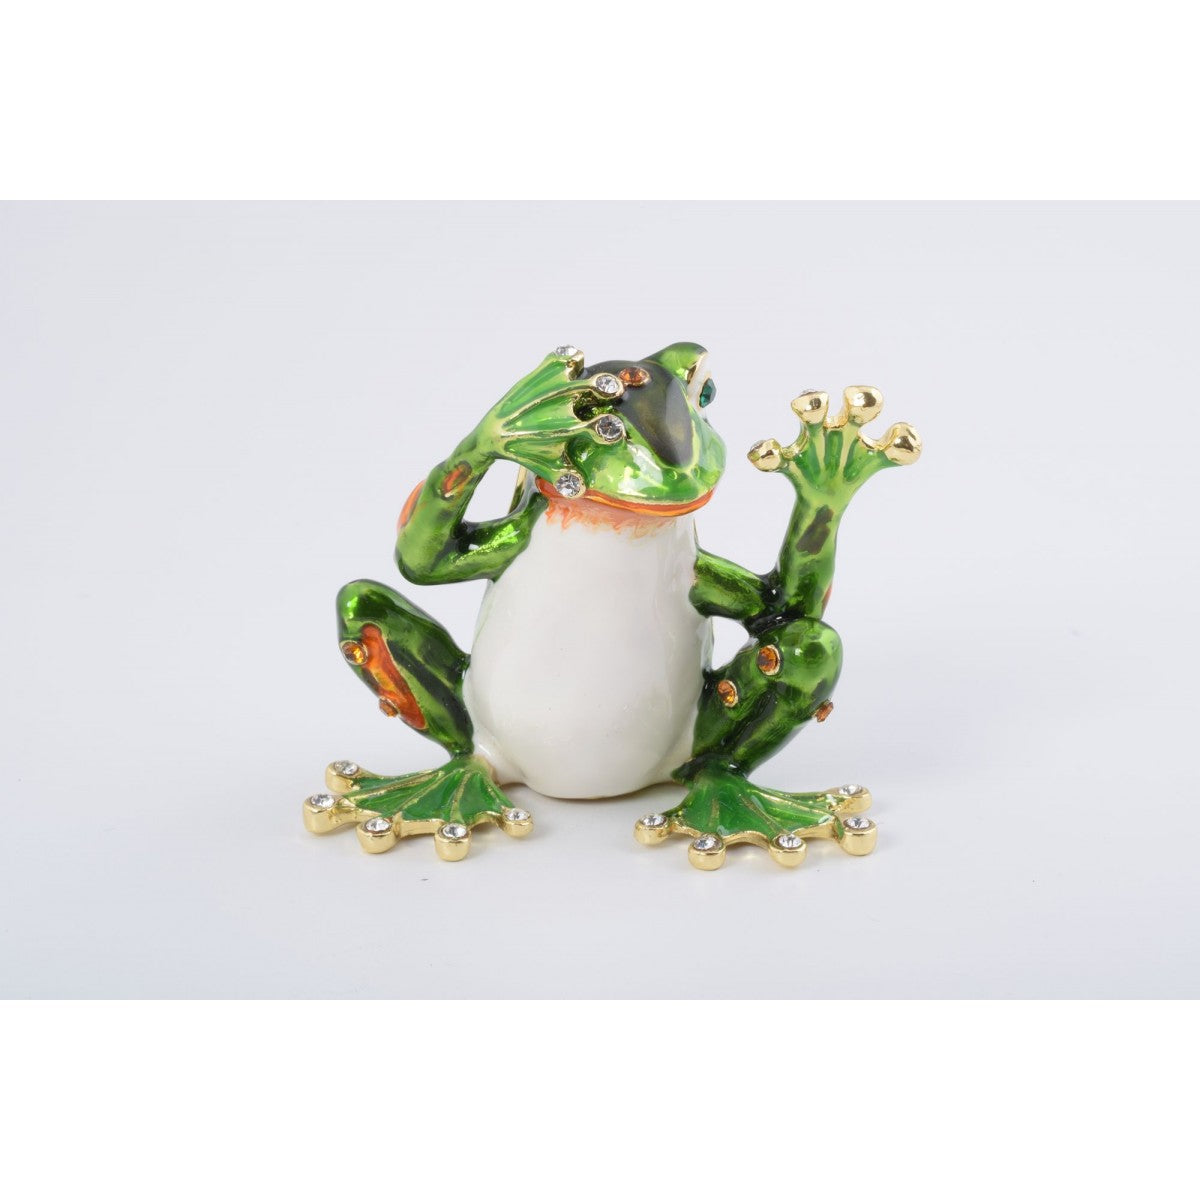 Green Frog See No Evil Trinket Box by Keren Kopal